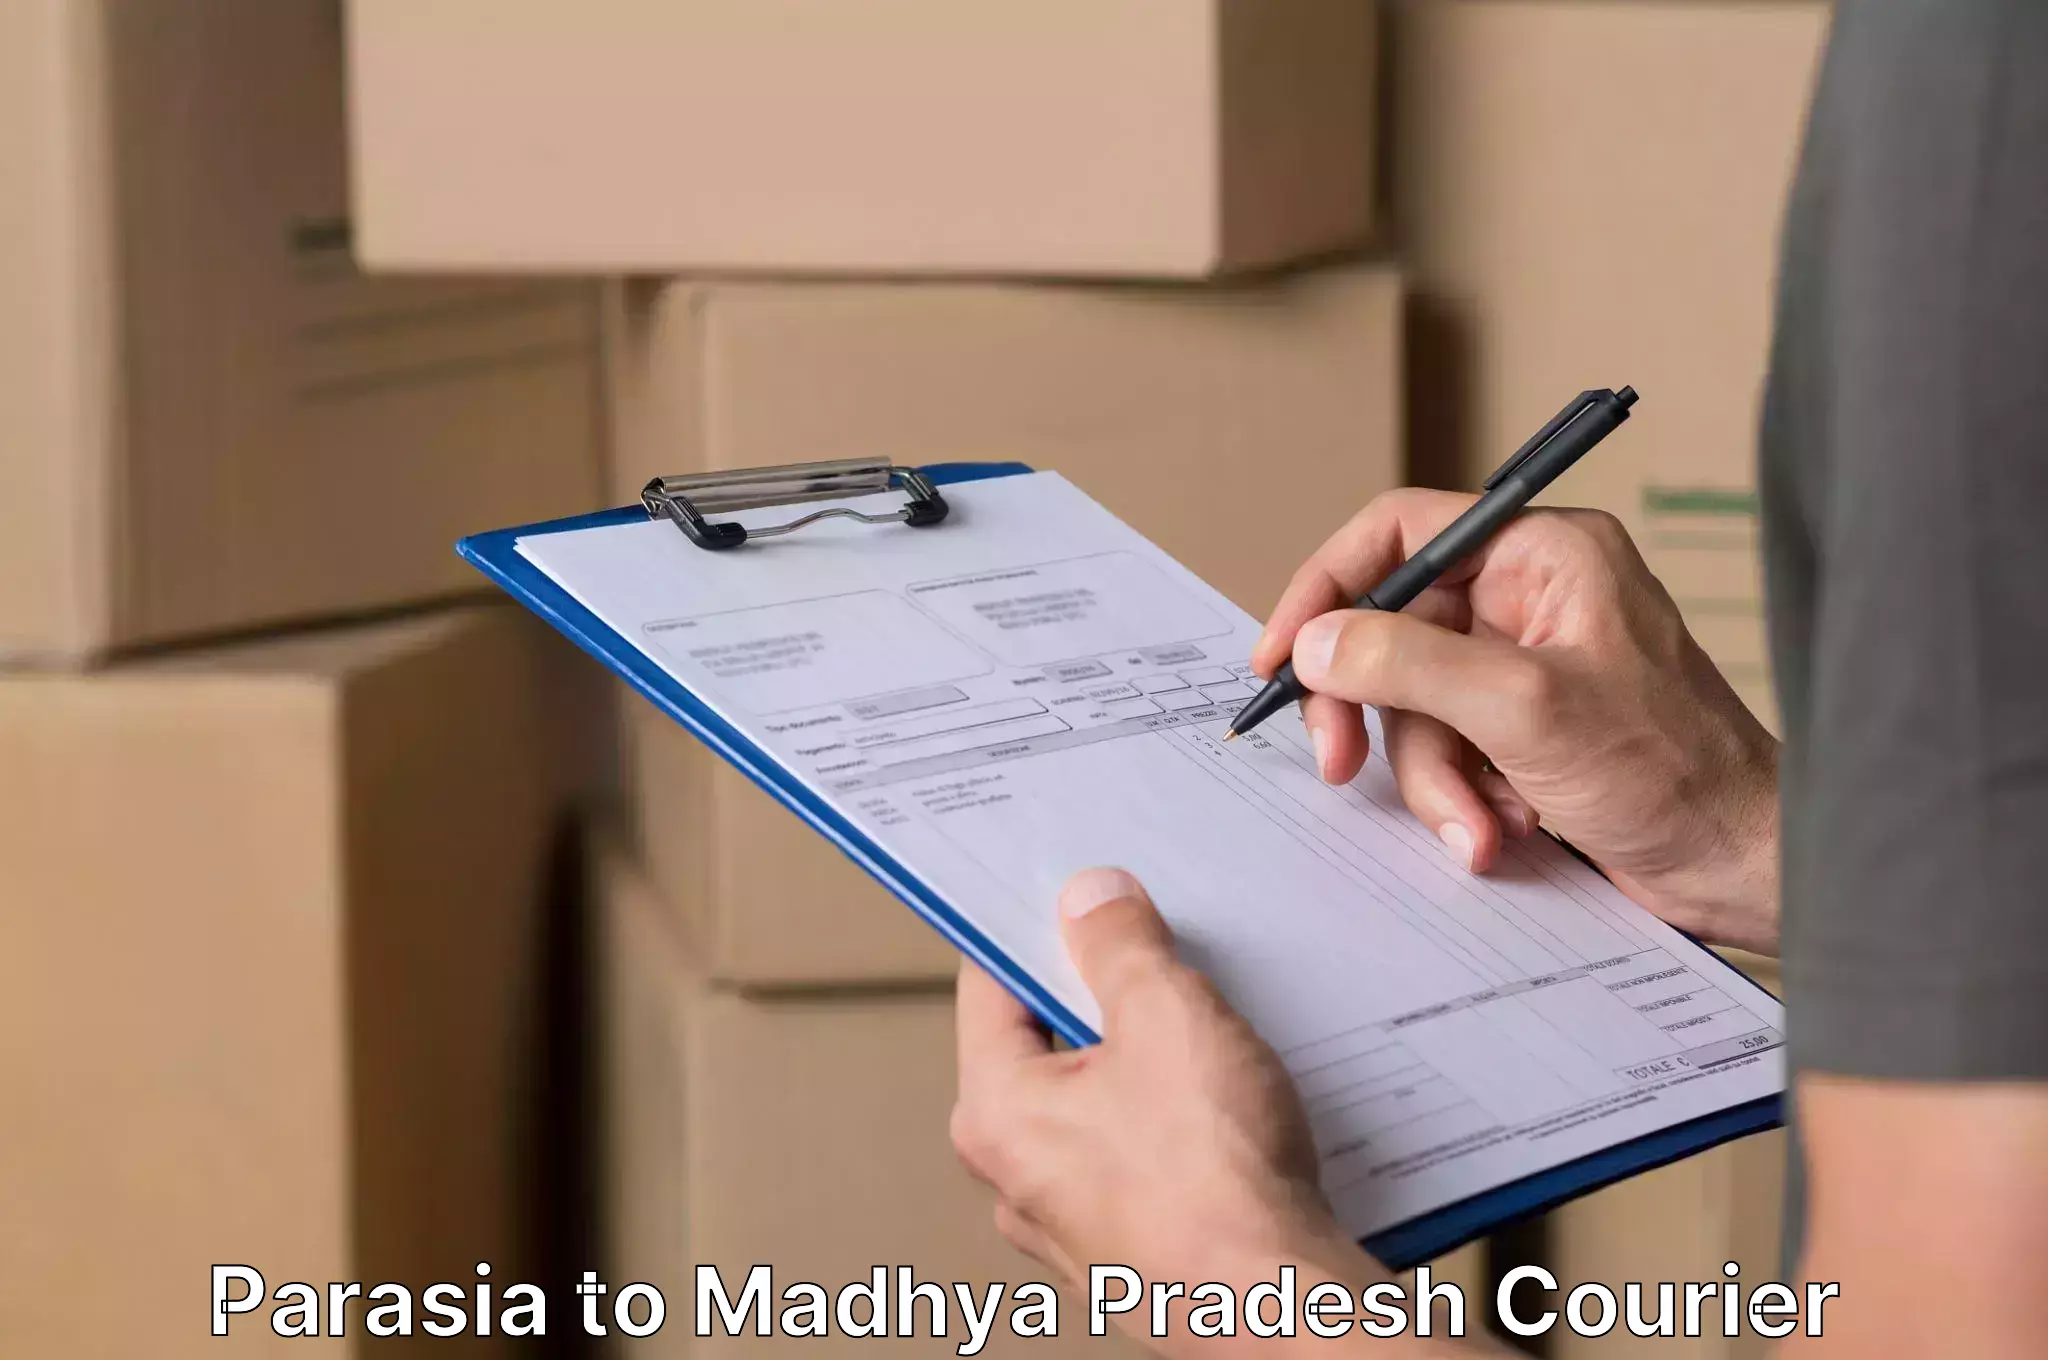 Efficient moving company Parasia to Ashoknagar